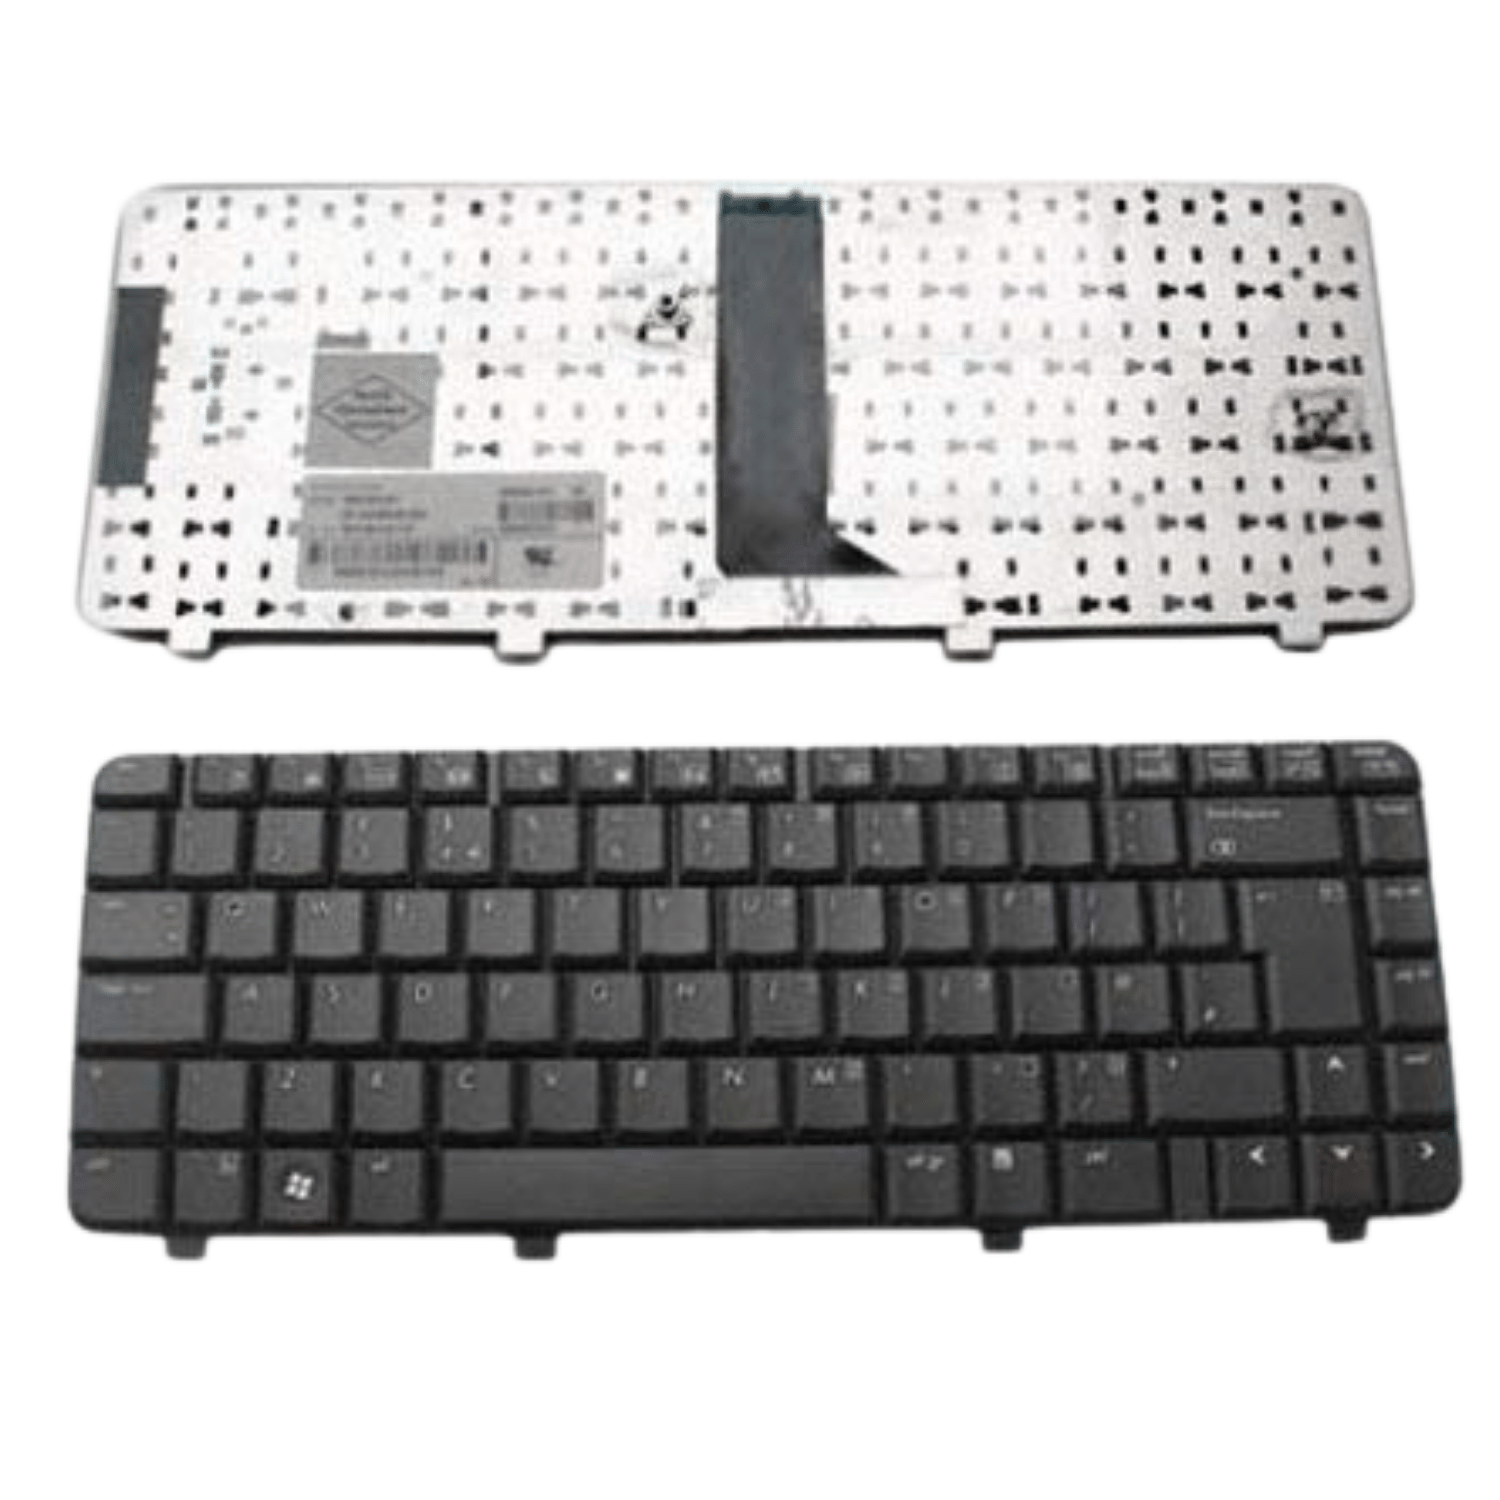 HP 540 550 Compaq 6720 6720S 6520 6520S Laptop keyboard